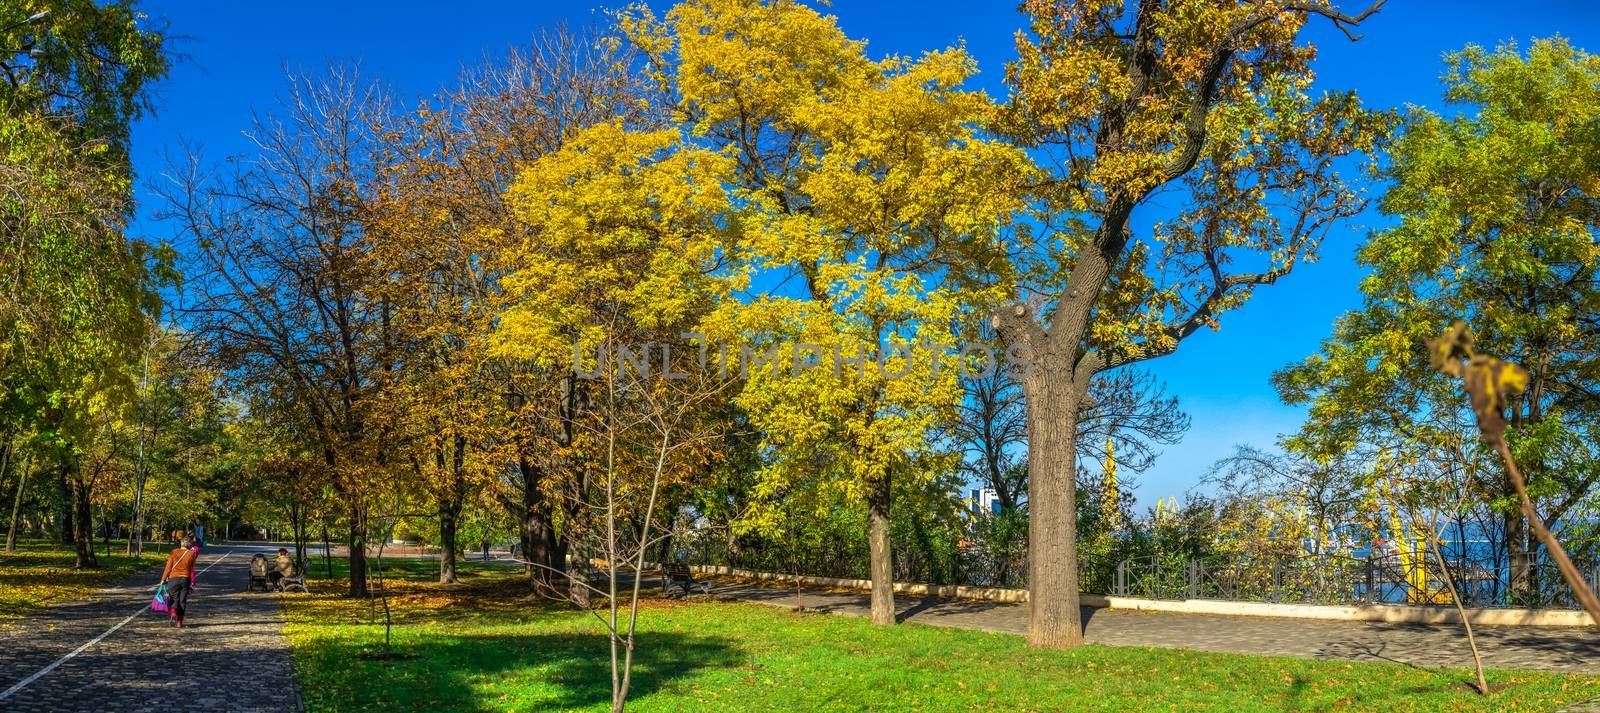 Odessa, Ukraine 11.05.2019.  Alleys and trees in Shevchenko Park in Odessa, Ukraine, on a sunny autumn day